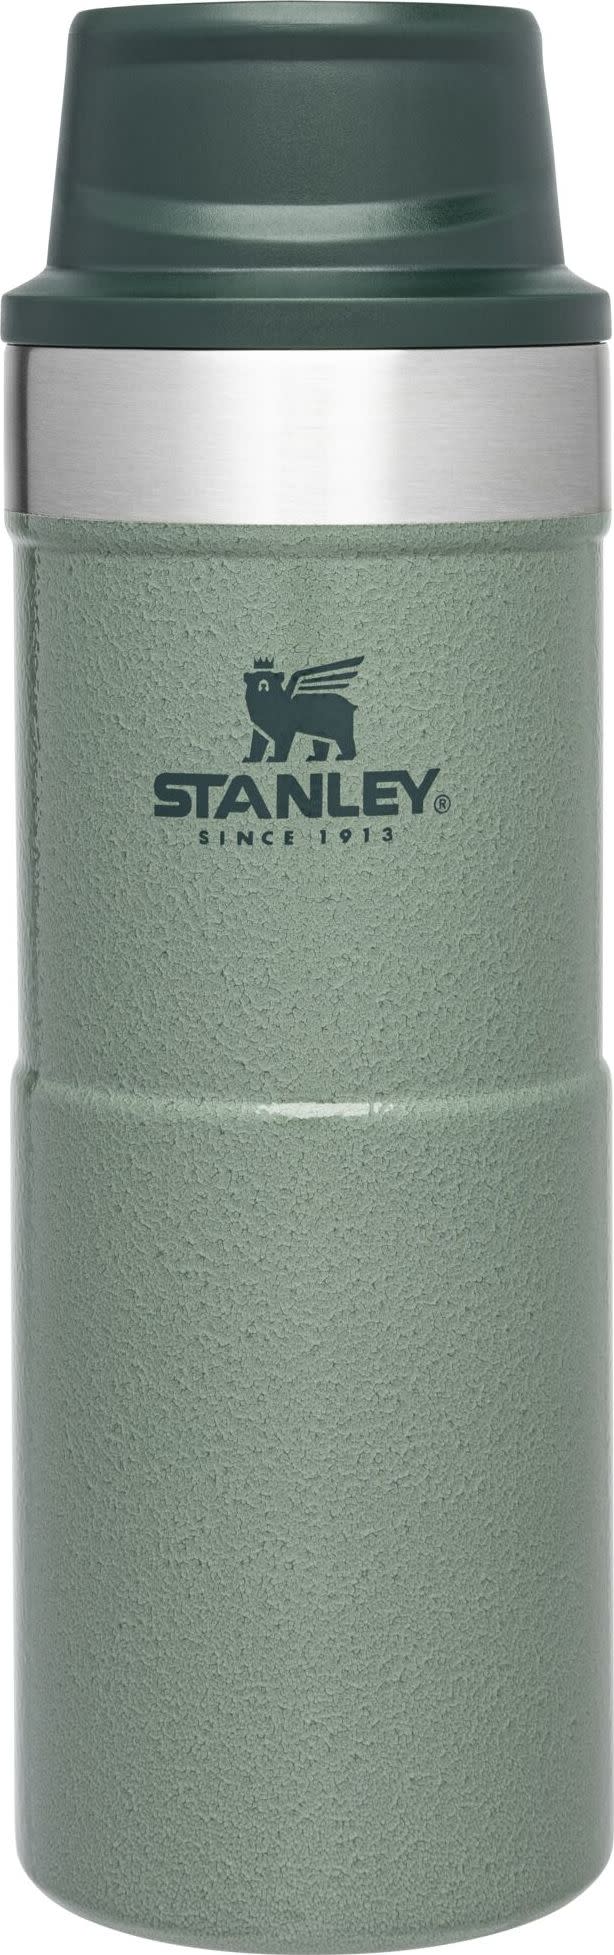 Stanley The Trigger-Action Travel Mug 0.35 L Hammertone Green